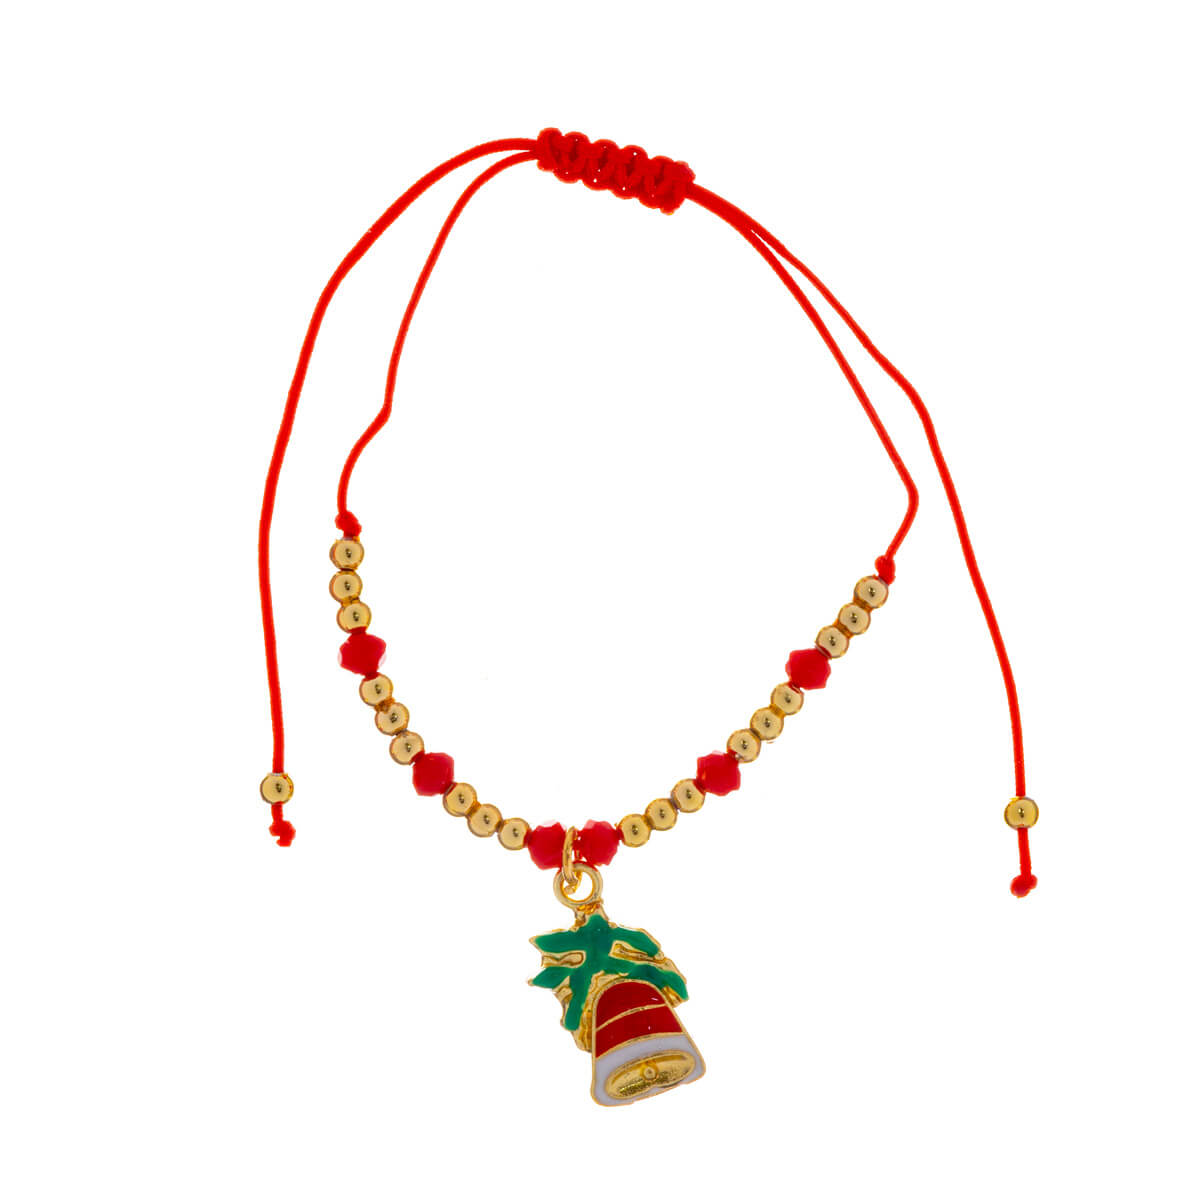 Christmas bracelet with necklace pendant